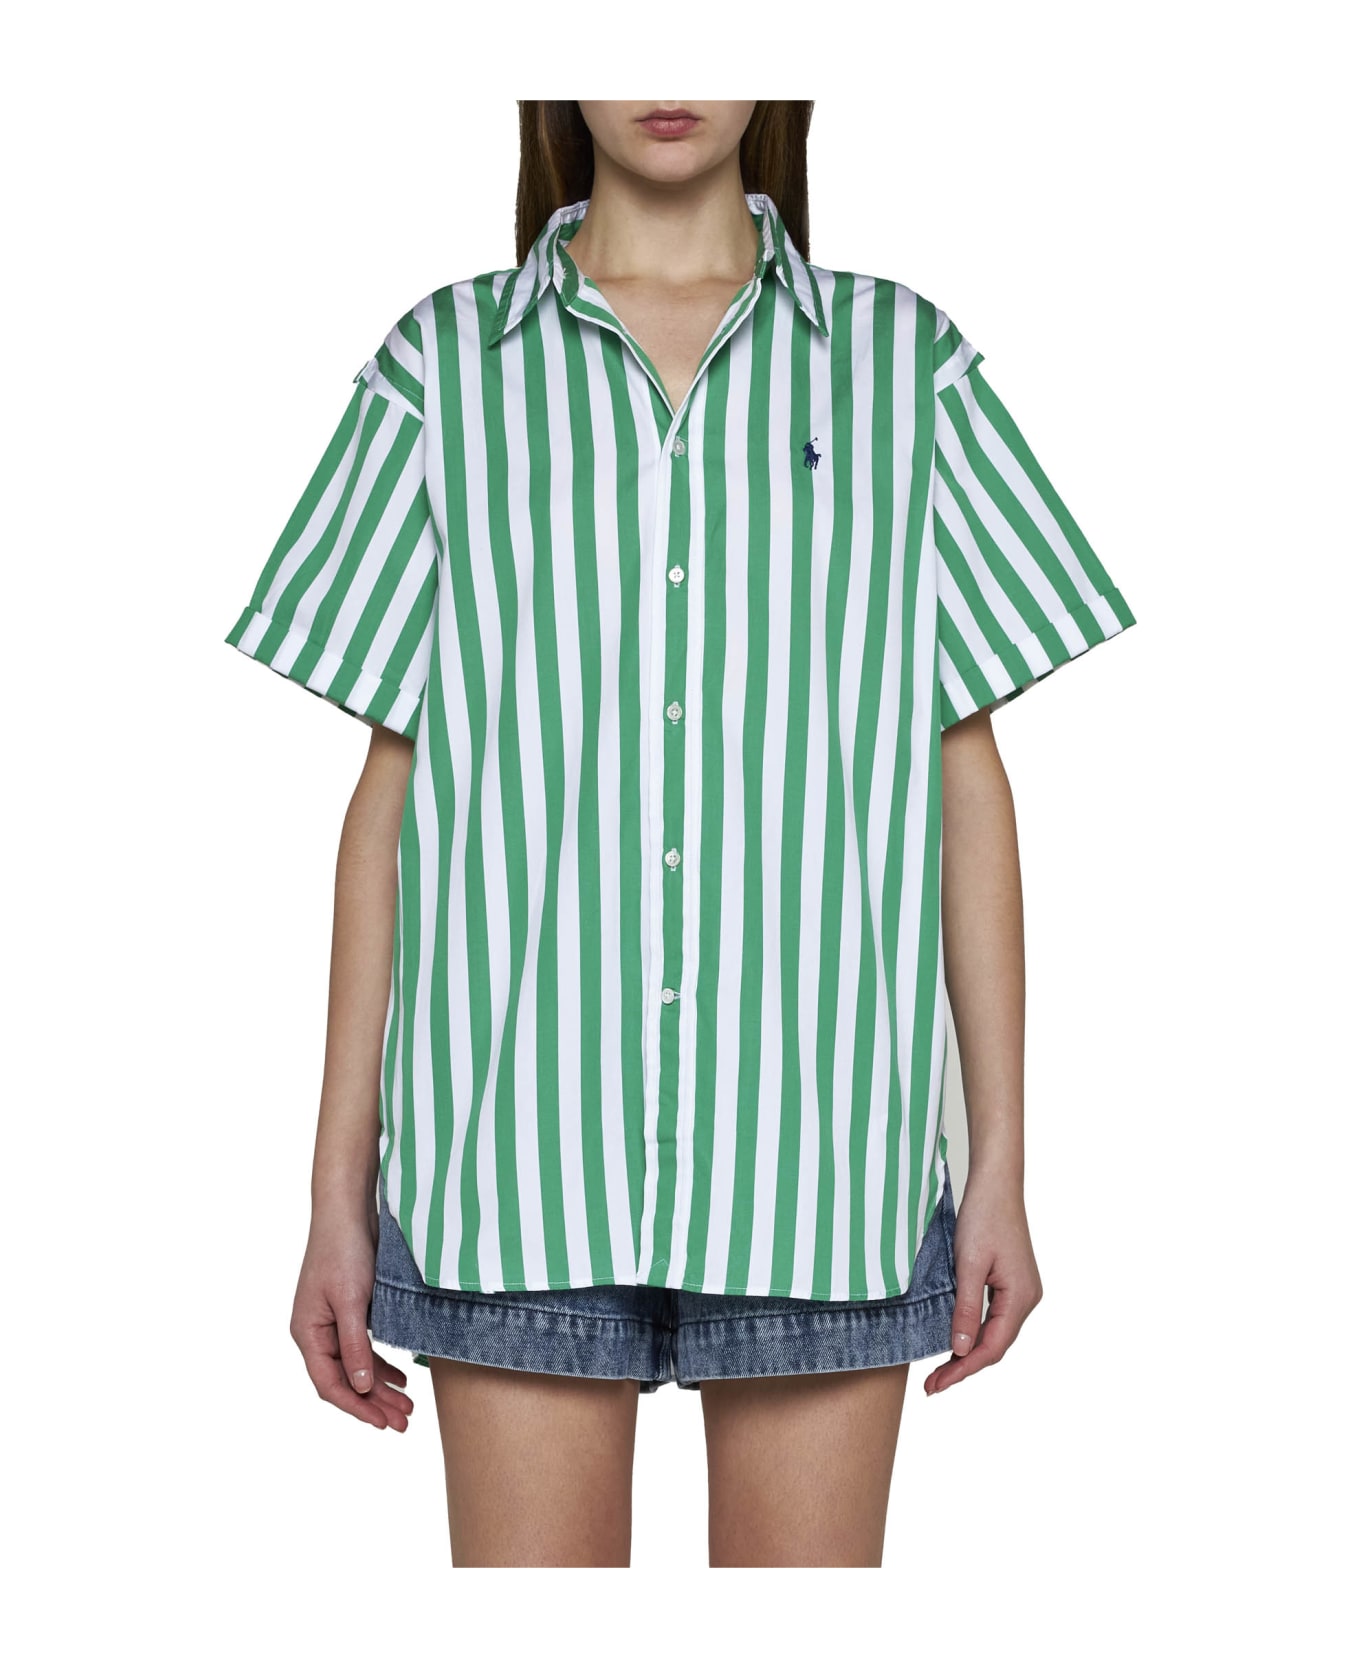 Polo Ralph Lauren Shirt - Green/white